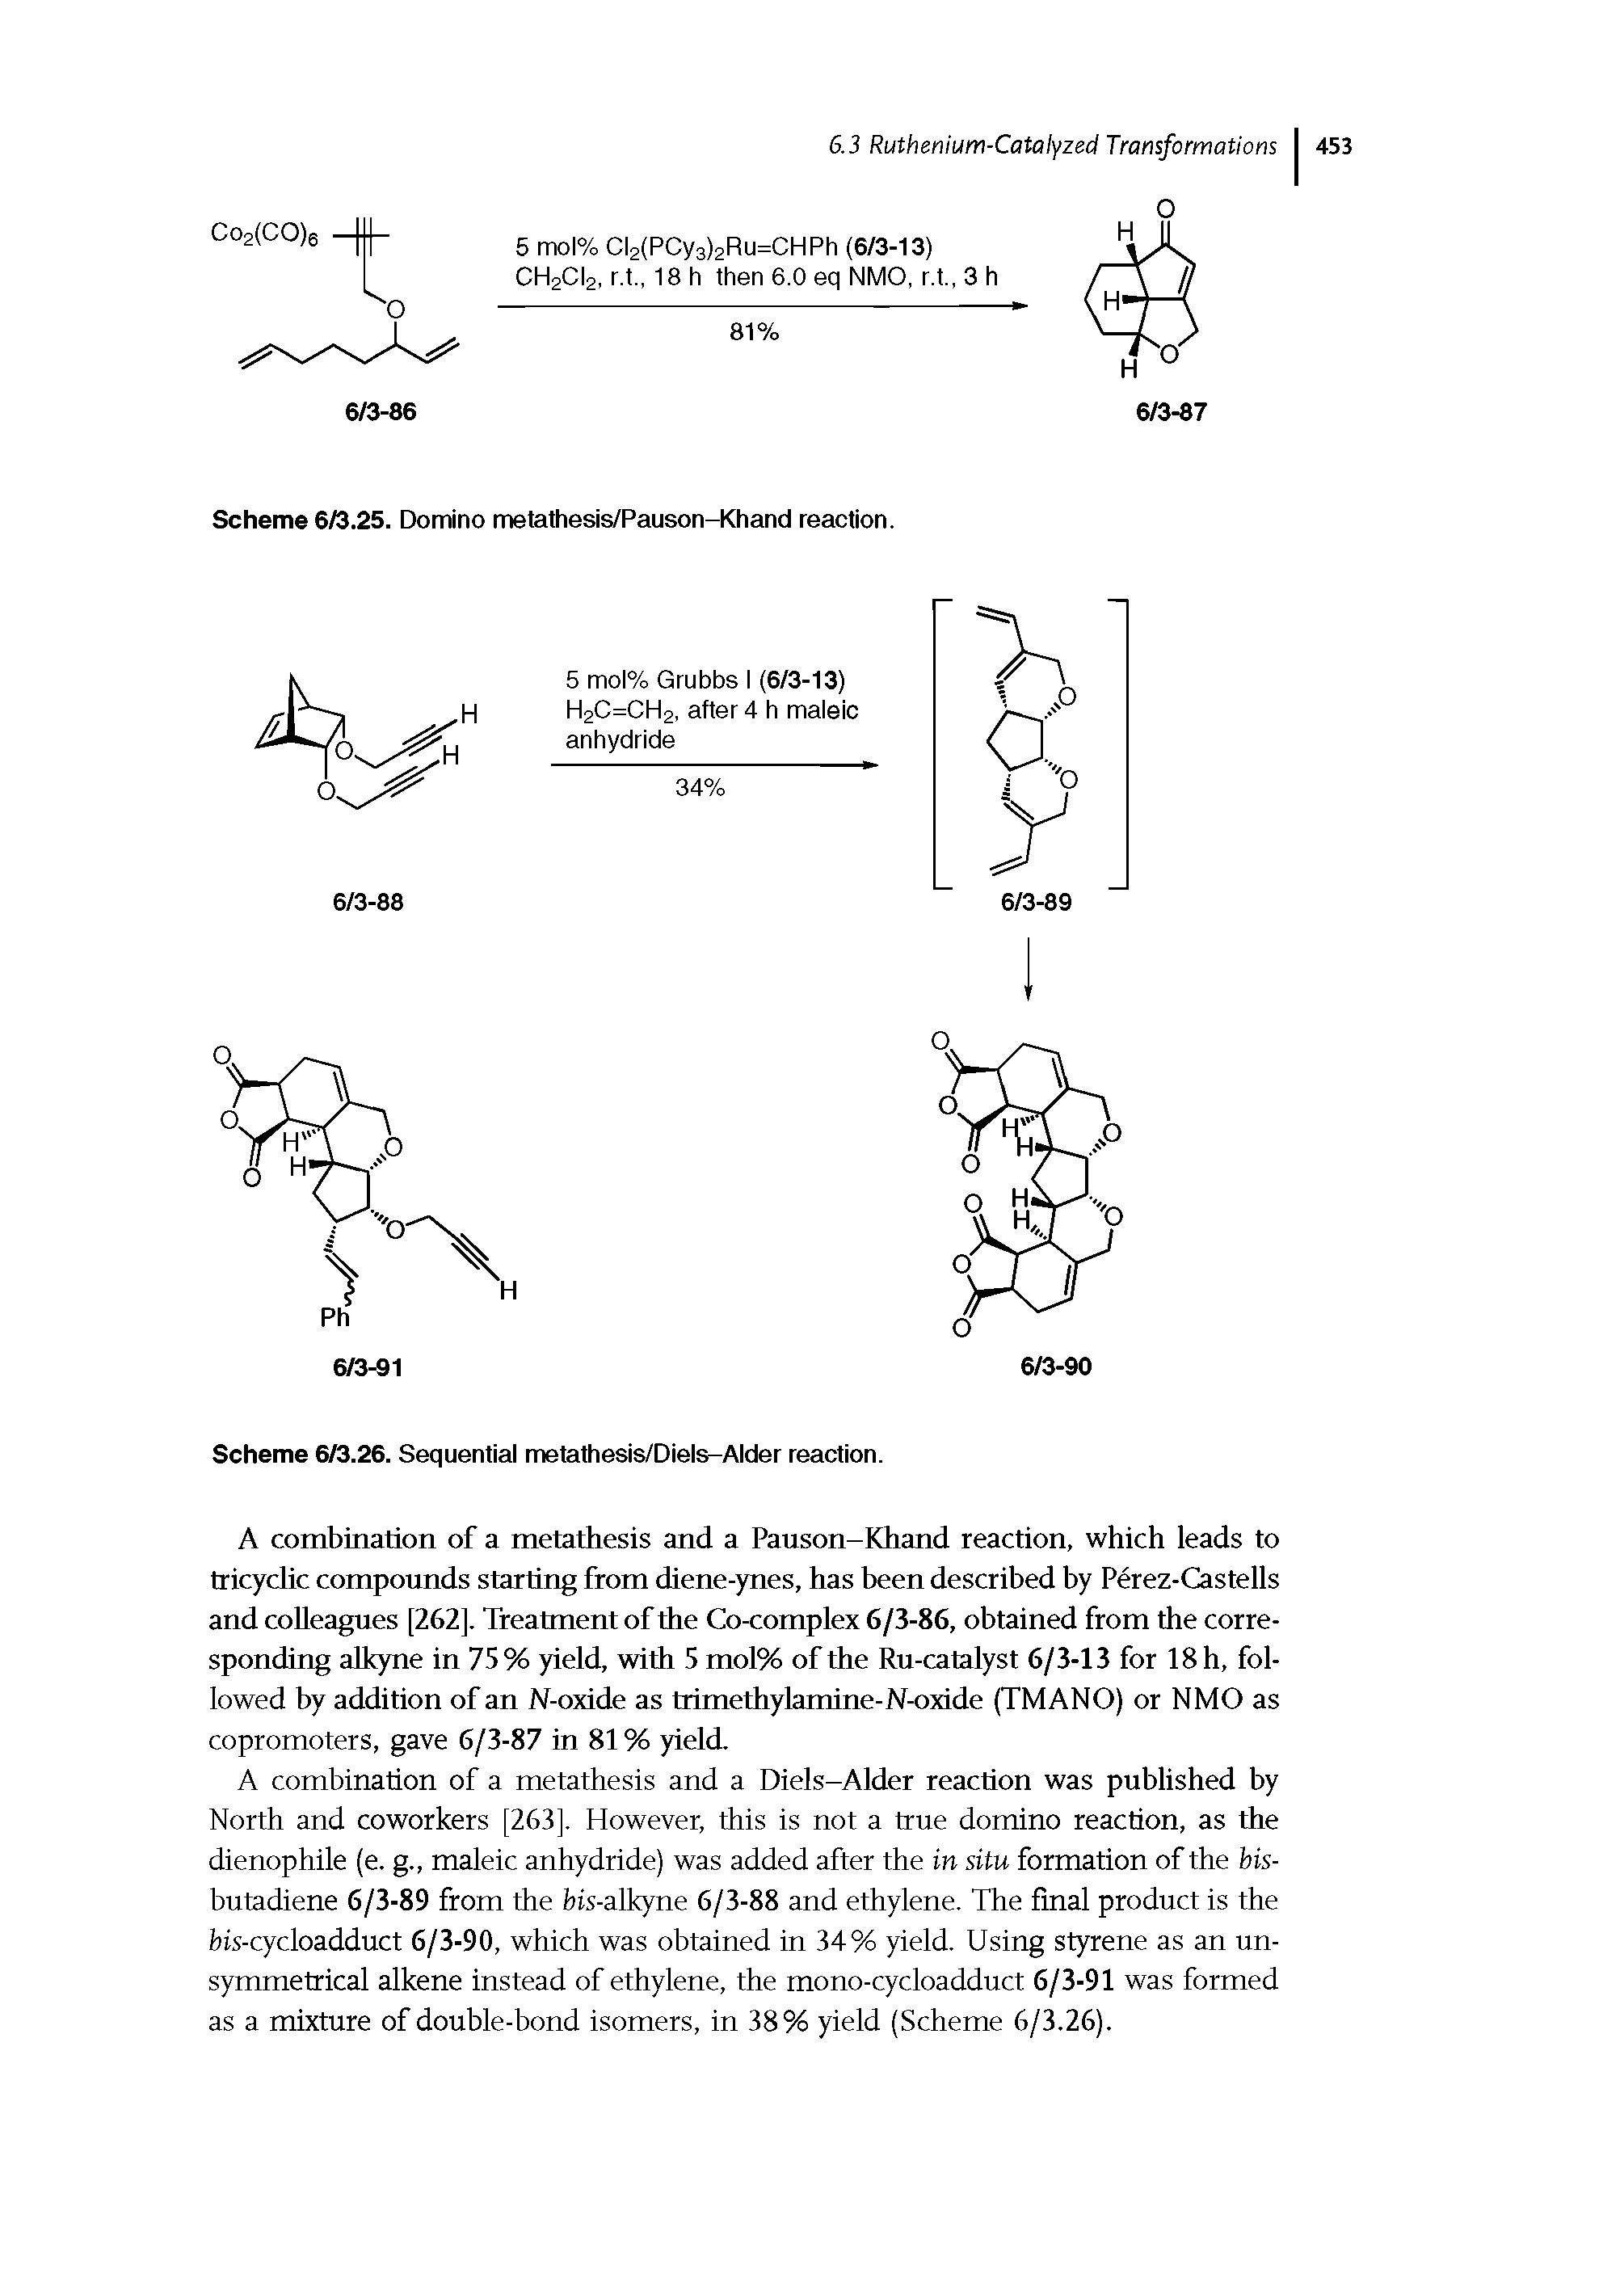 Scheme 6/3.25. Domino metathesis/Pauson-Khand reaction.